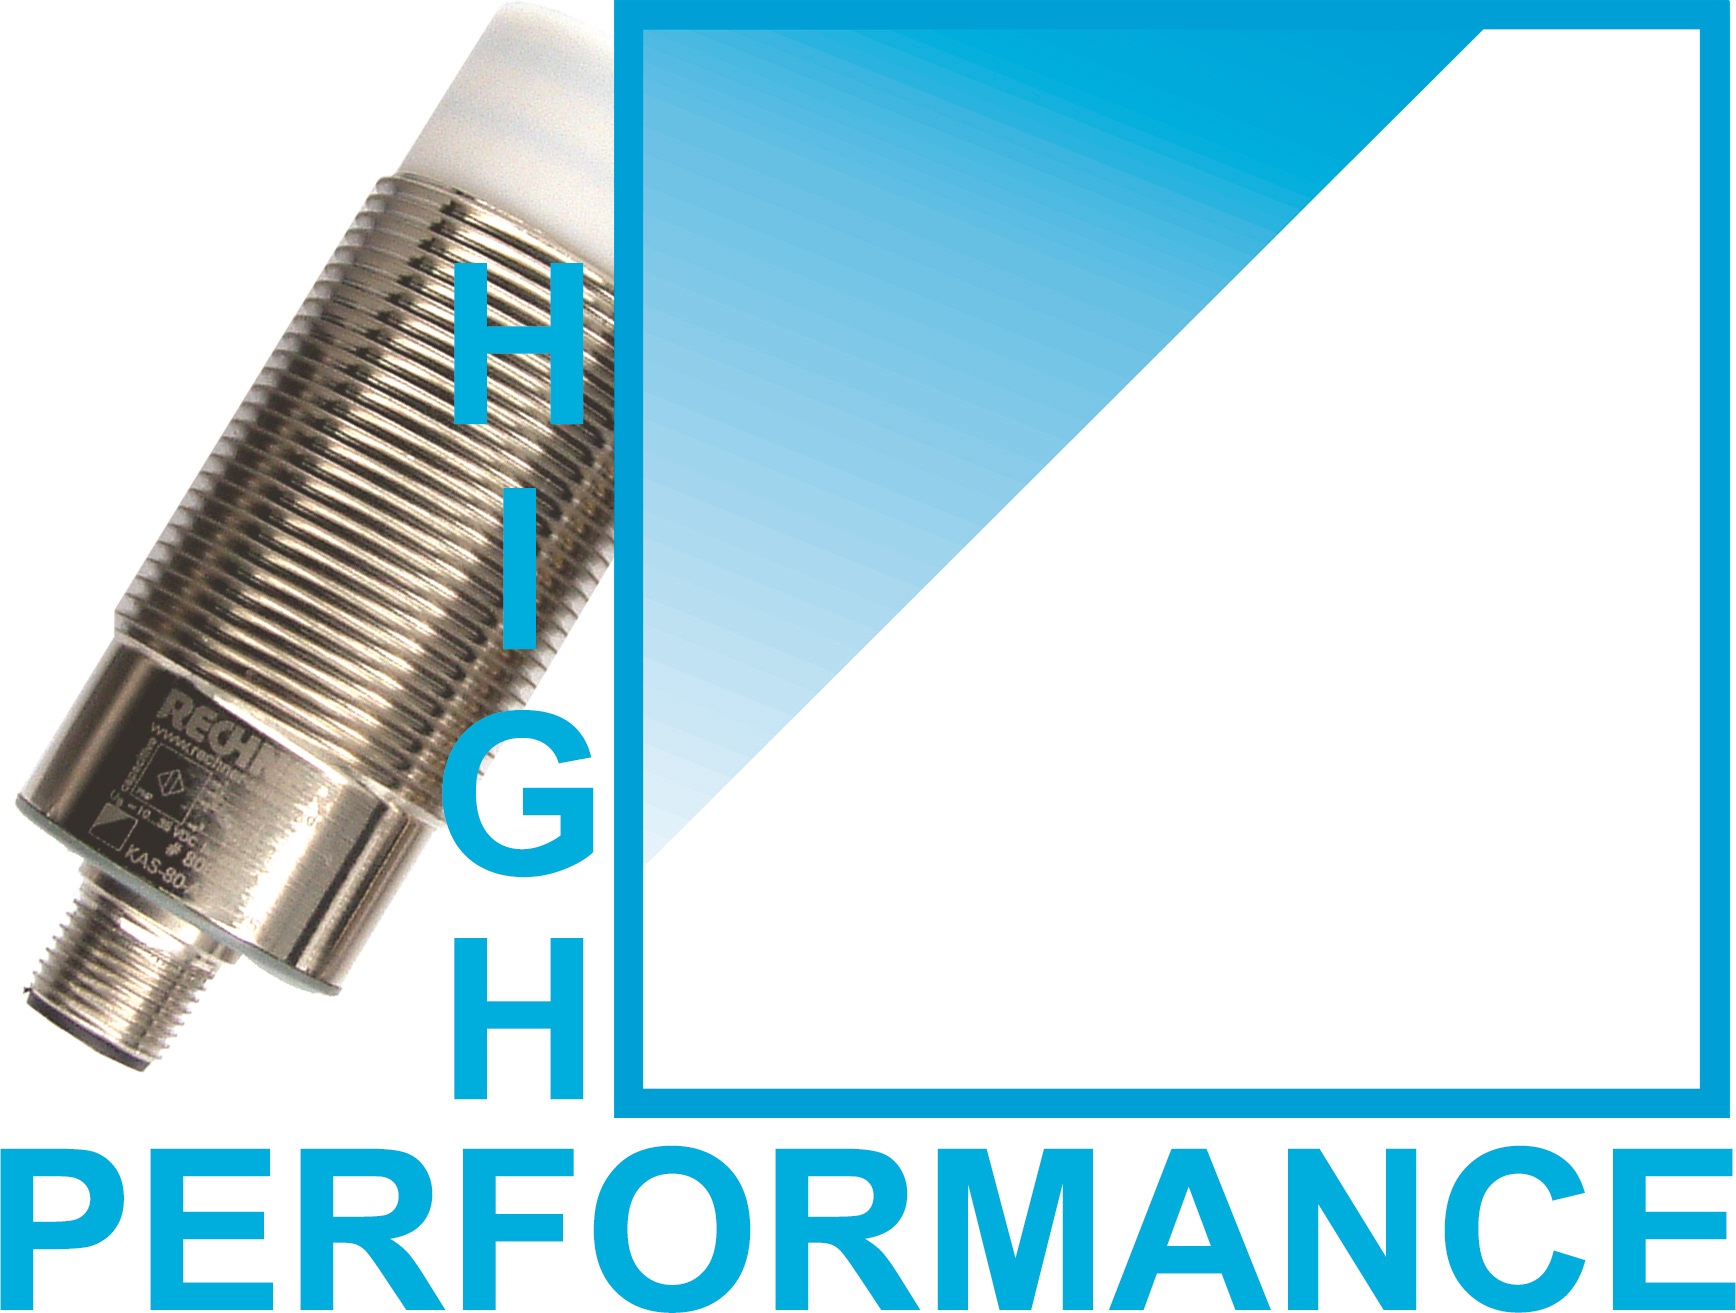 High Performance Logo